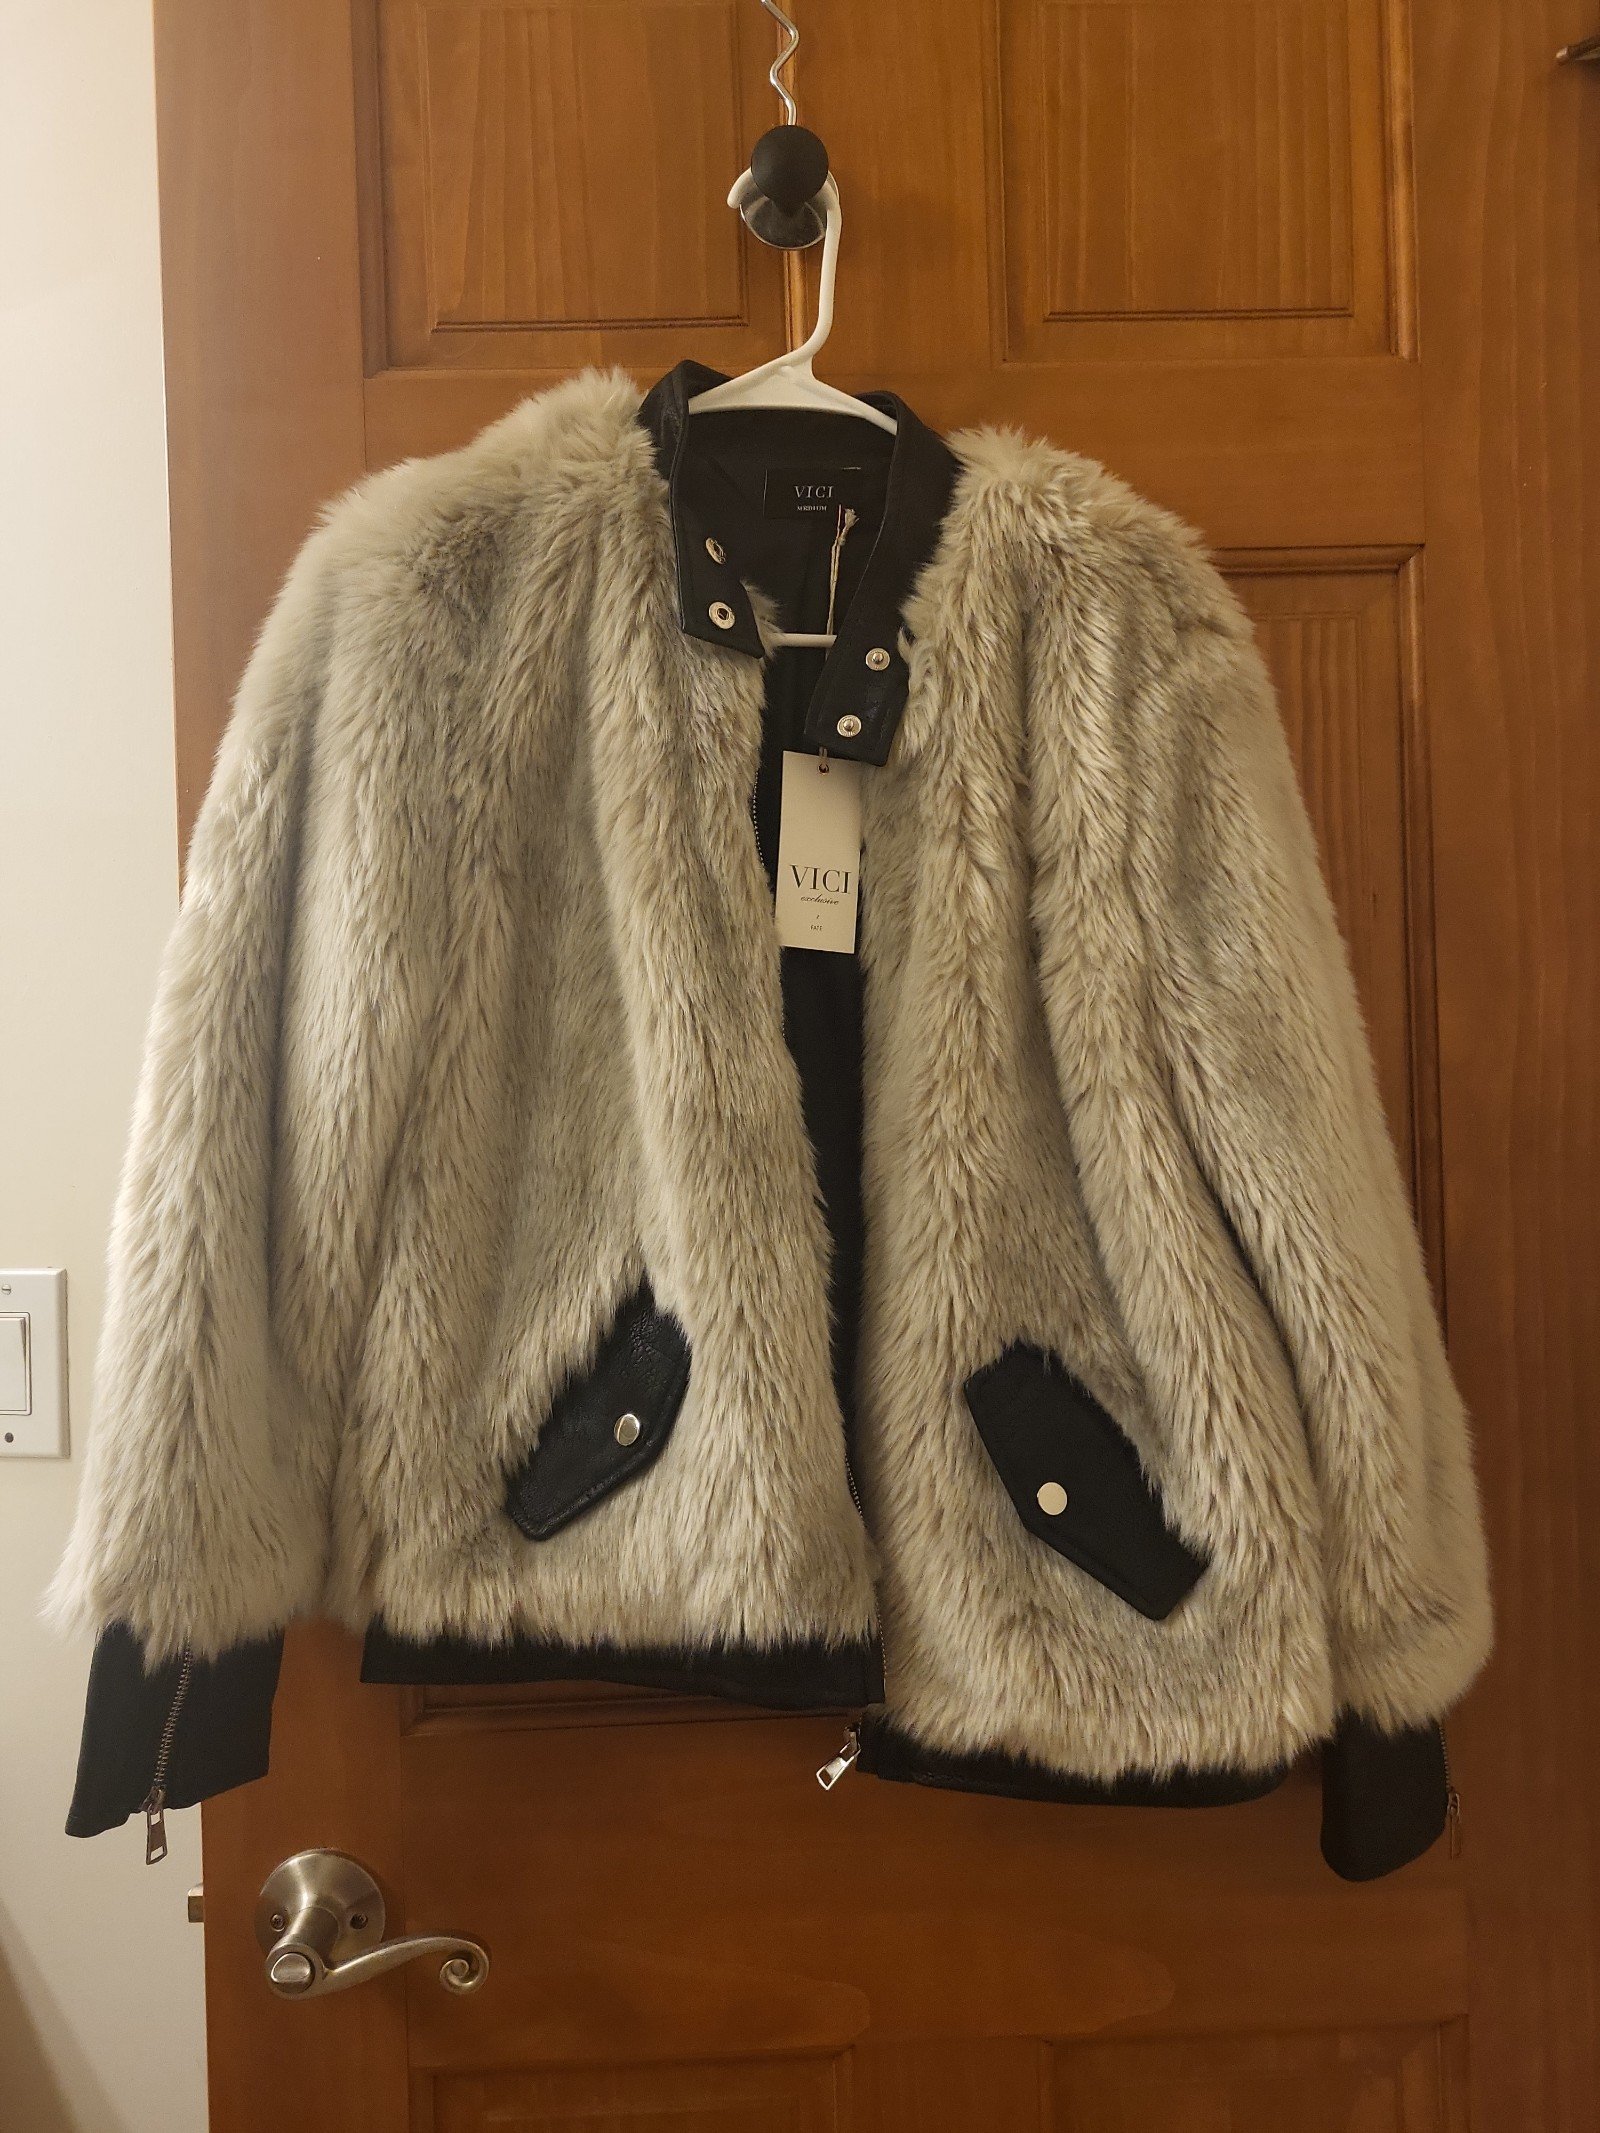 big discount VICI Vanity Faux Fur Leather Trim Pocketed Jacket LToxaT9e5 hot sale